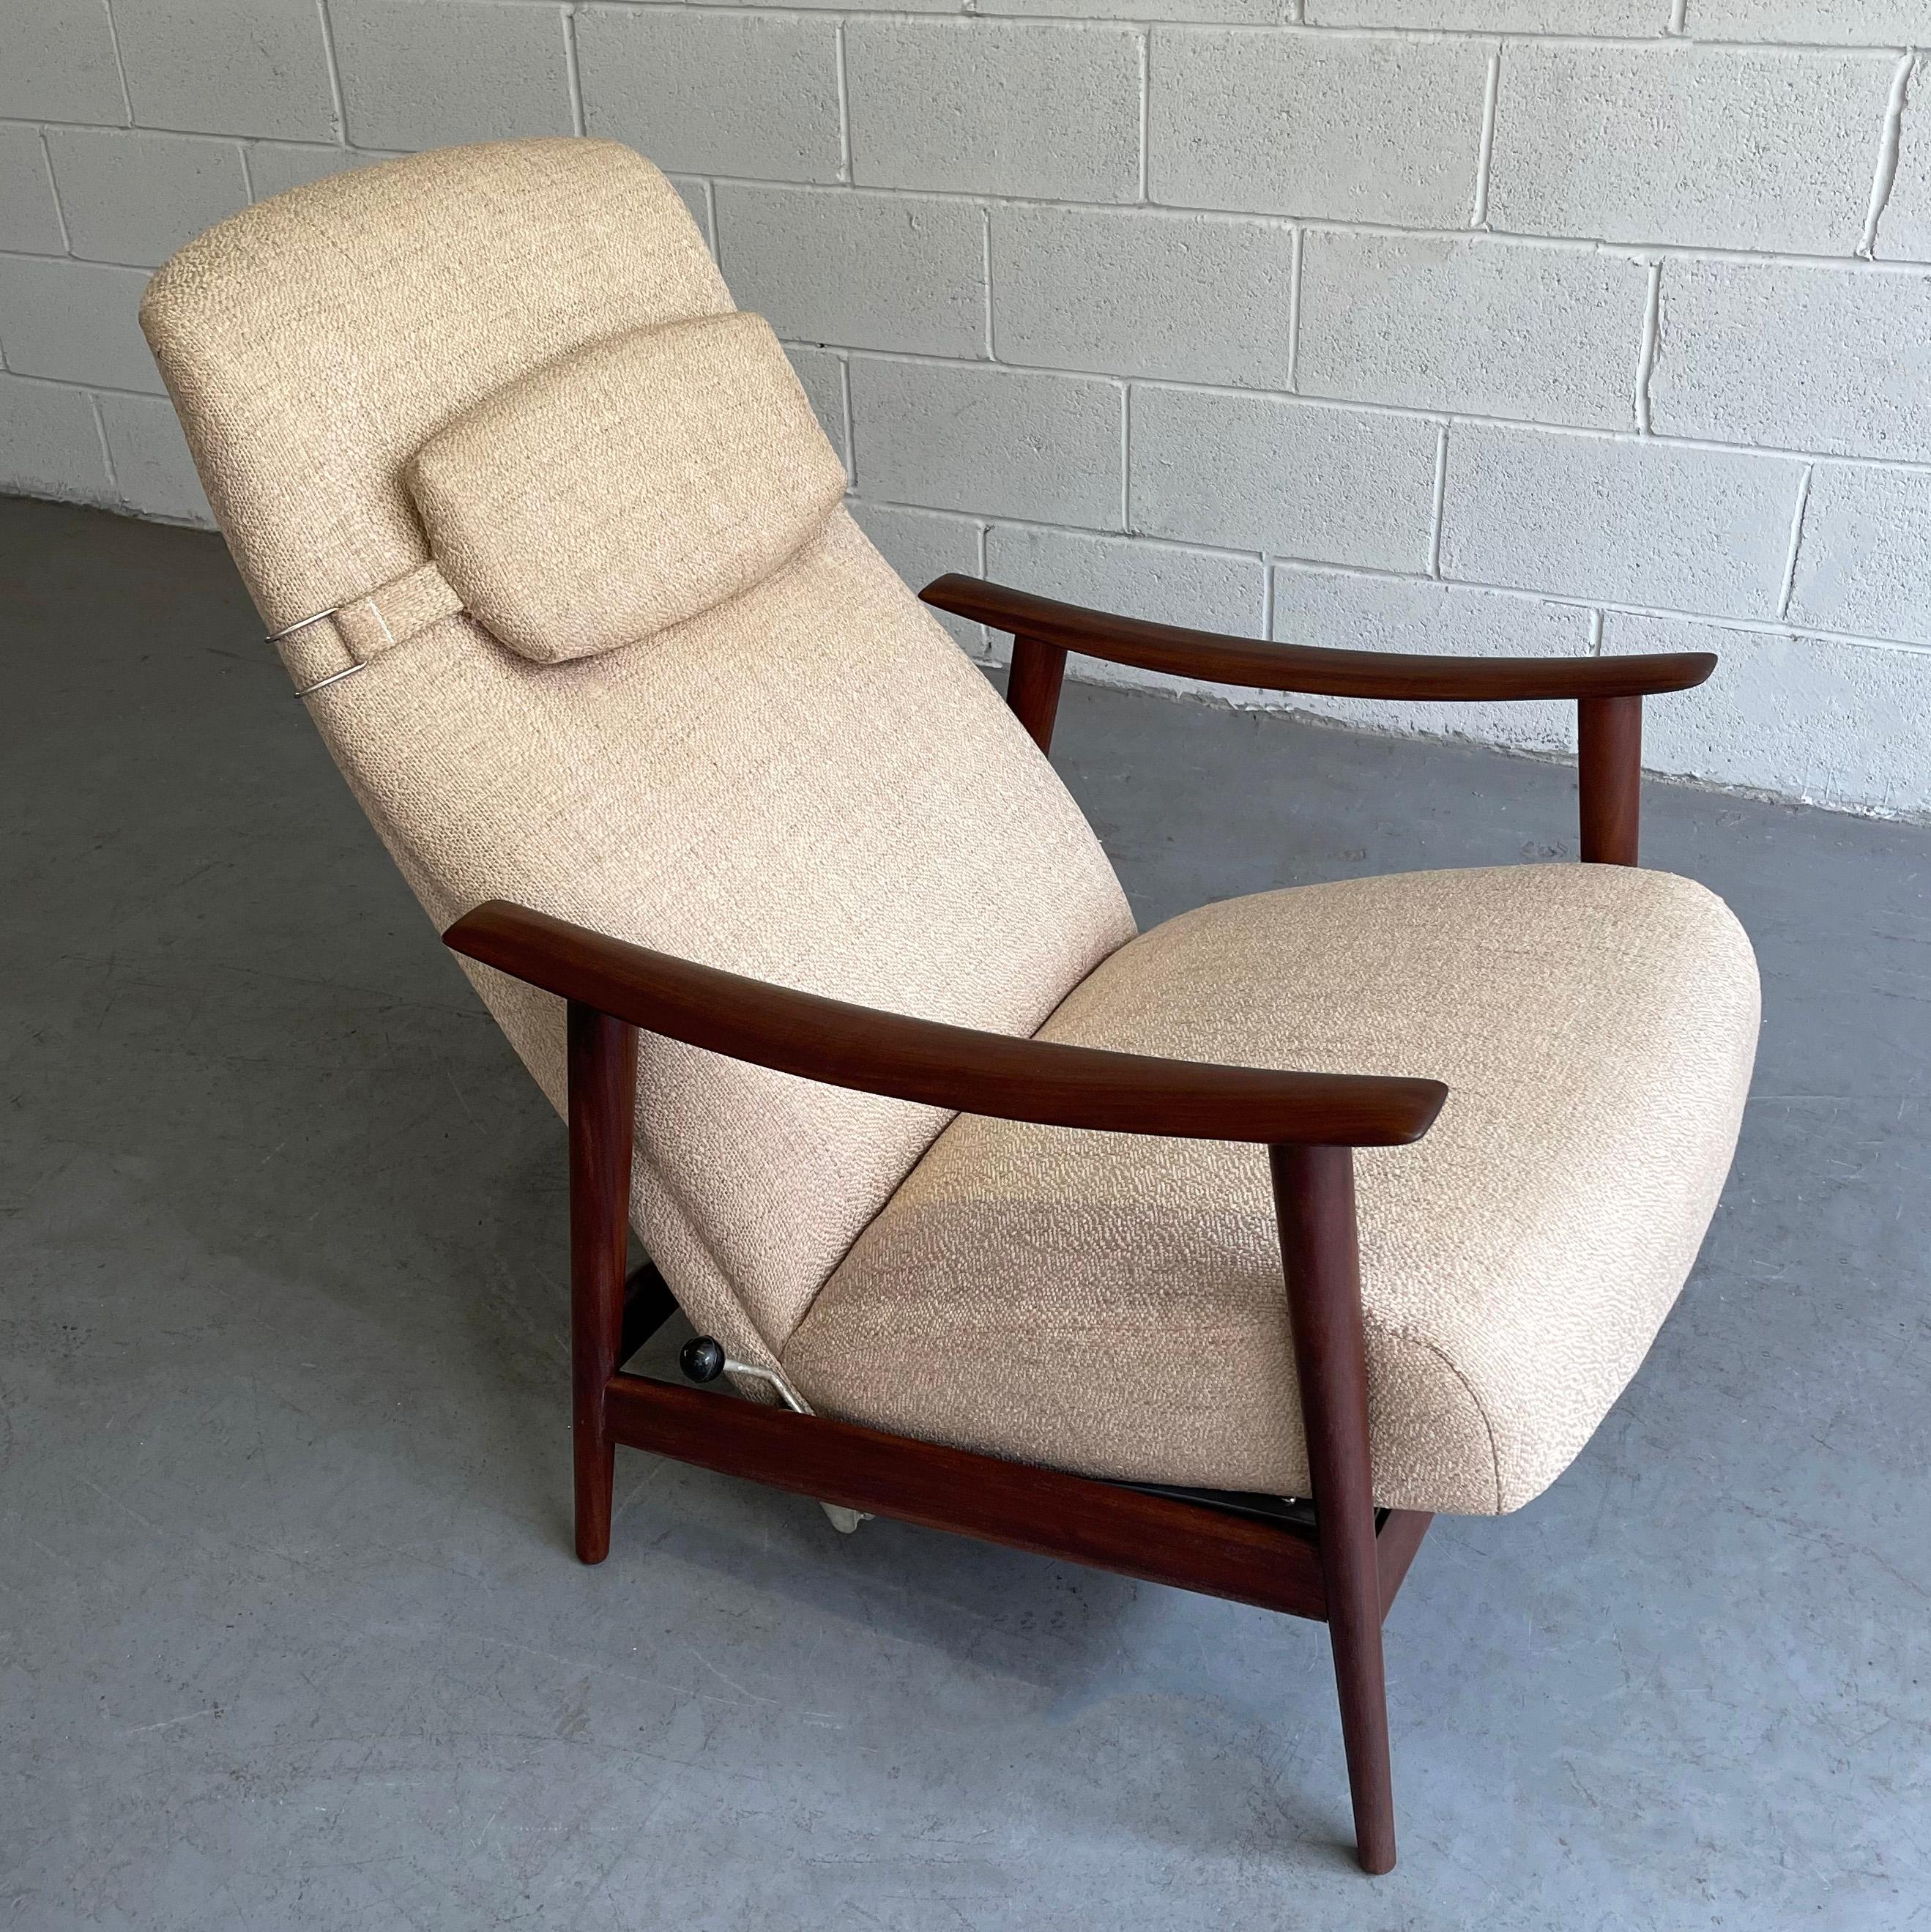 20th Century Danish Modern High Back Teak Recliner Lounge Chair by Arnt Lande